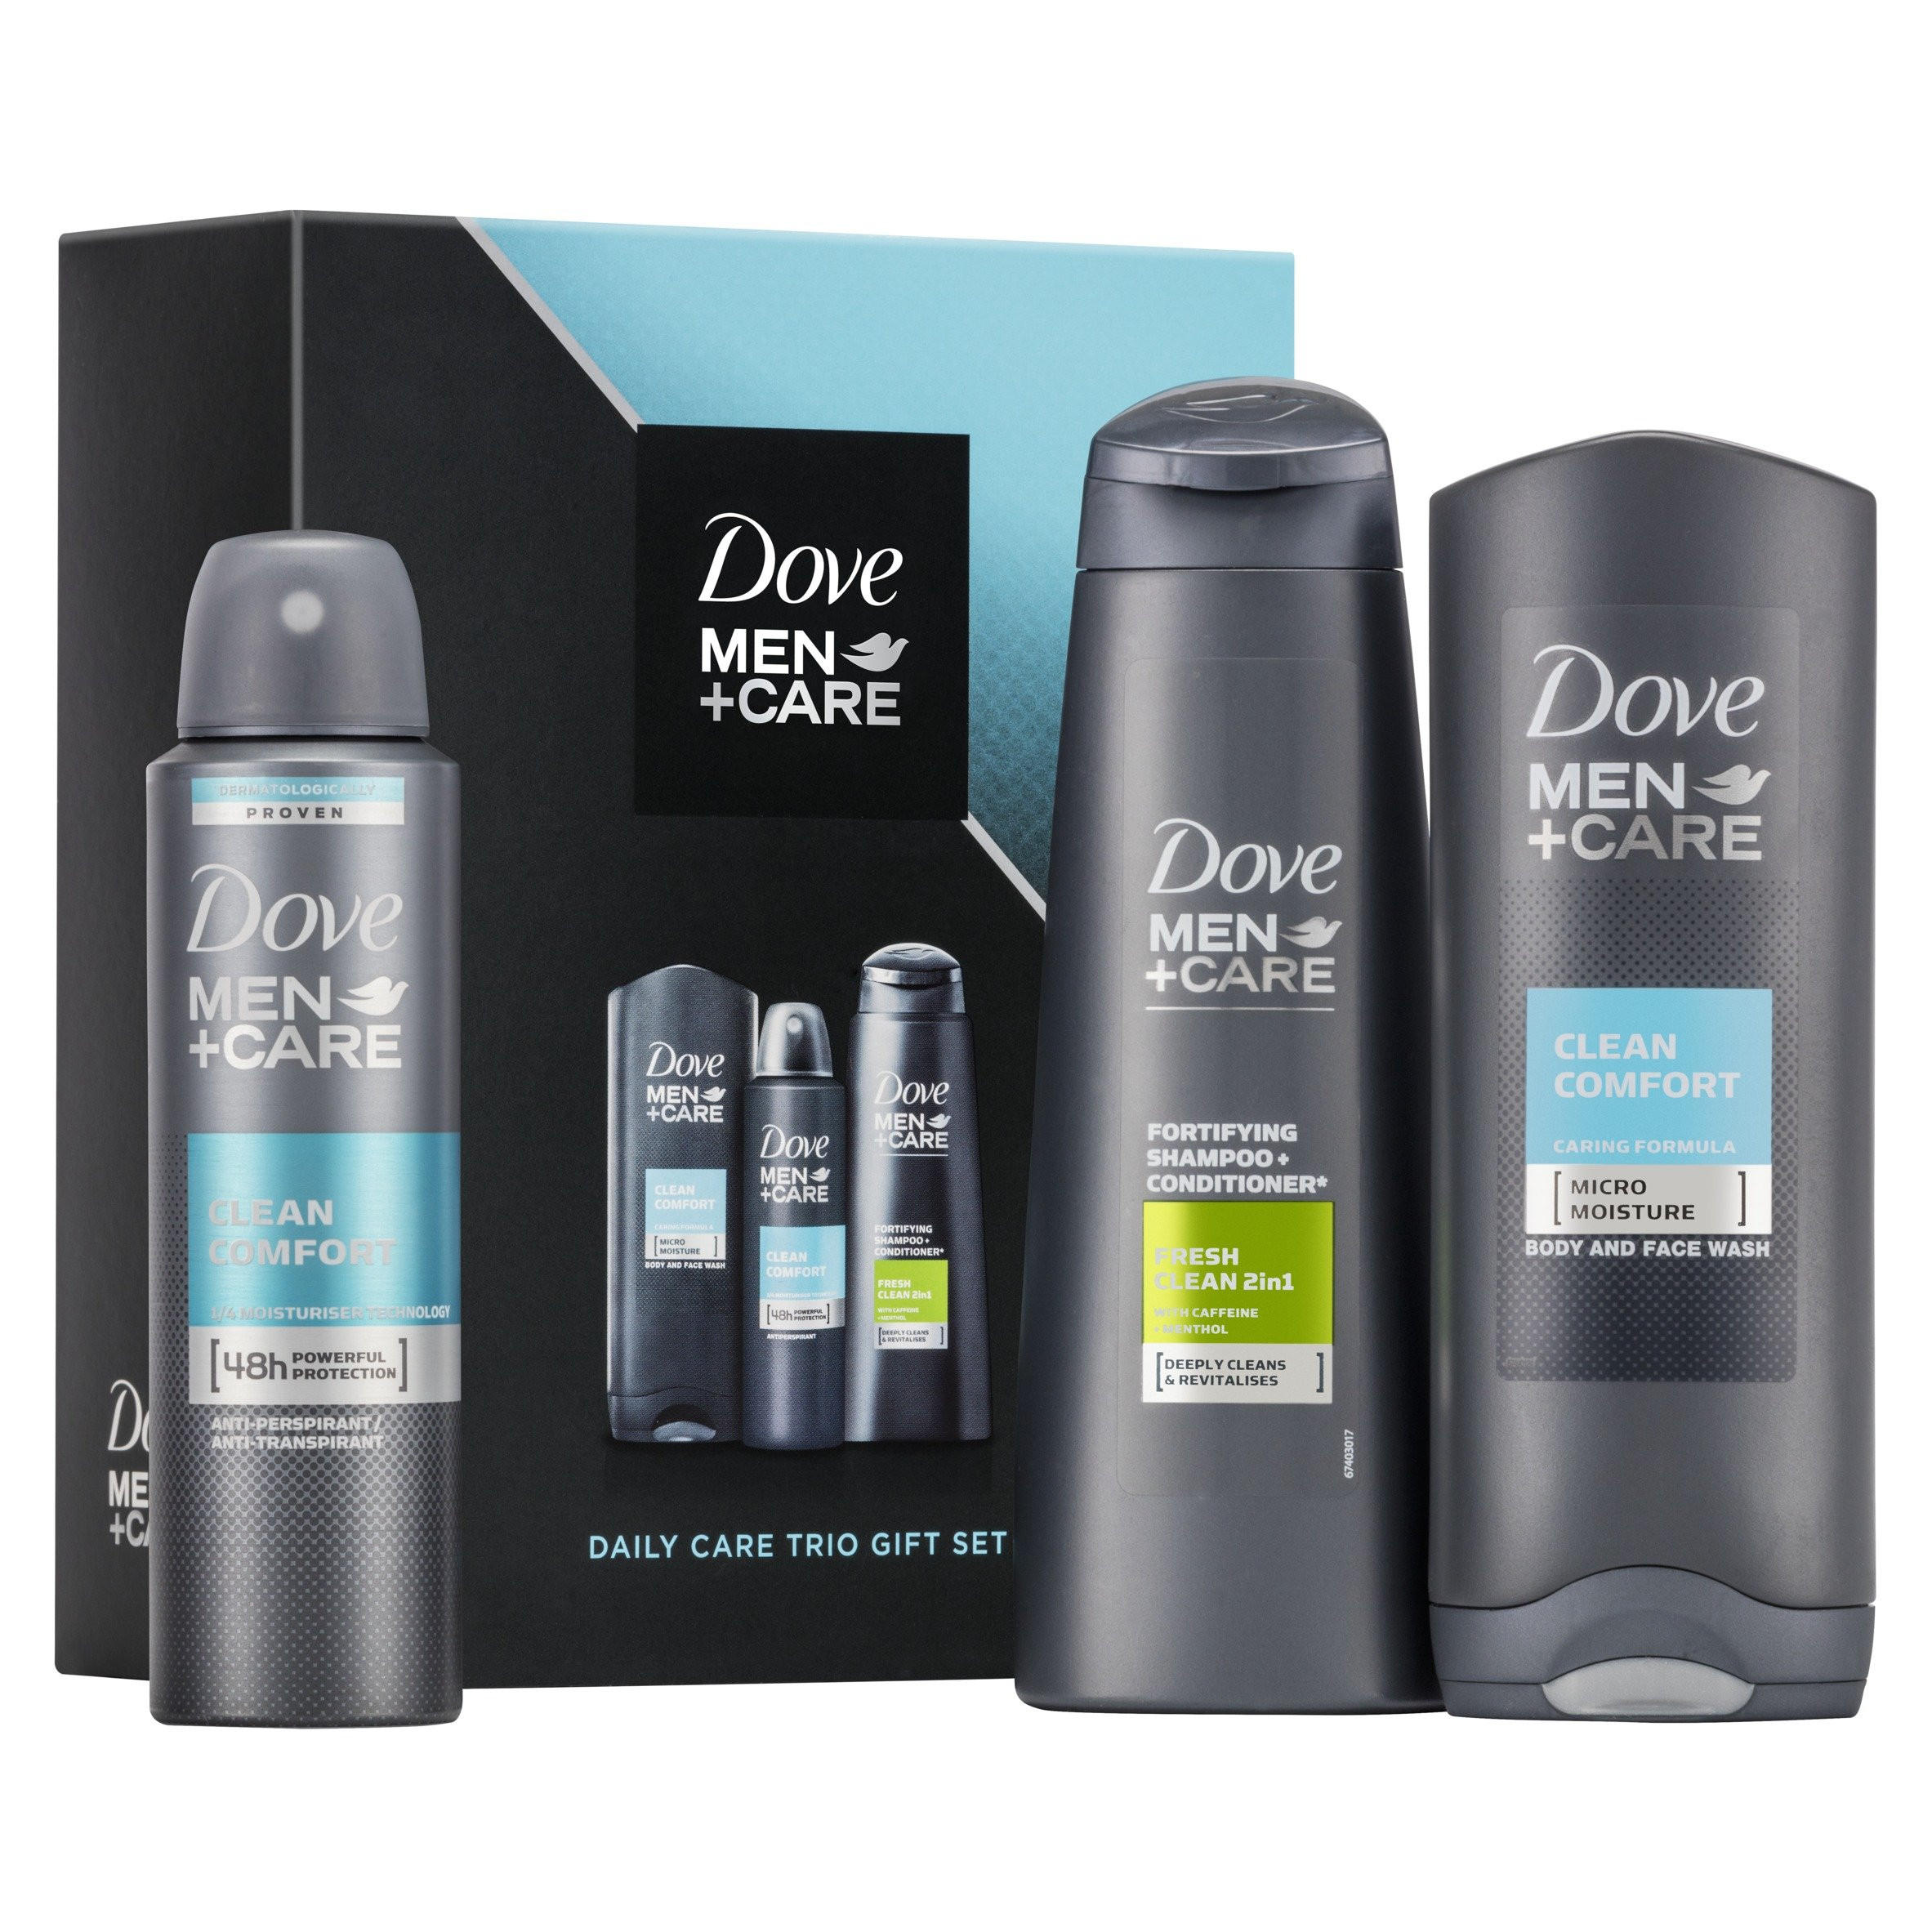 Dove Men+Care Daily Care Trio Gift Set 3 piece 1 | Women's Toiletries ...